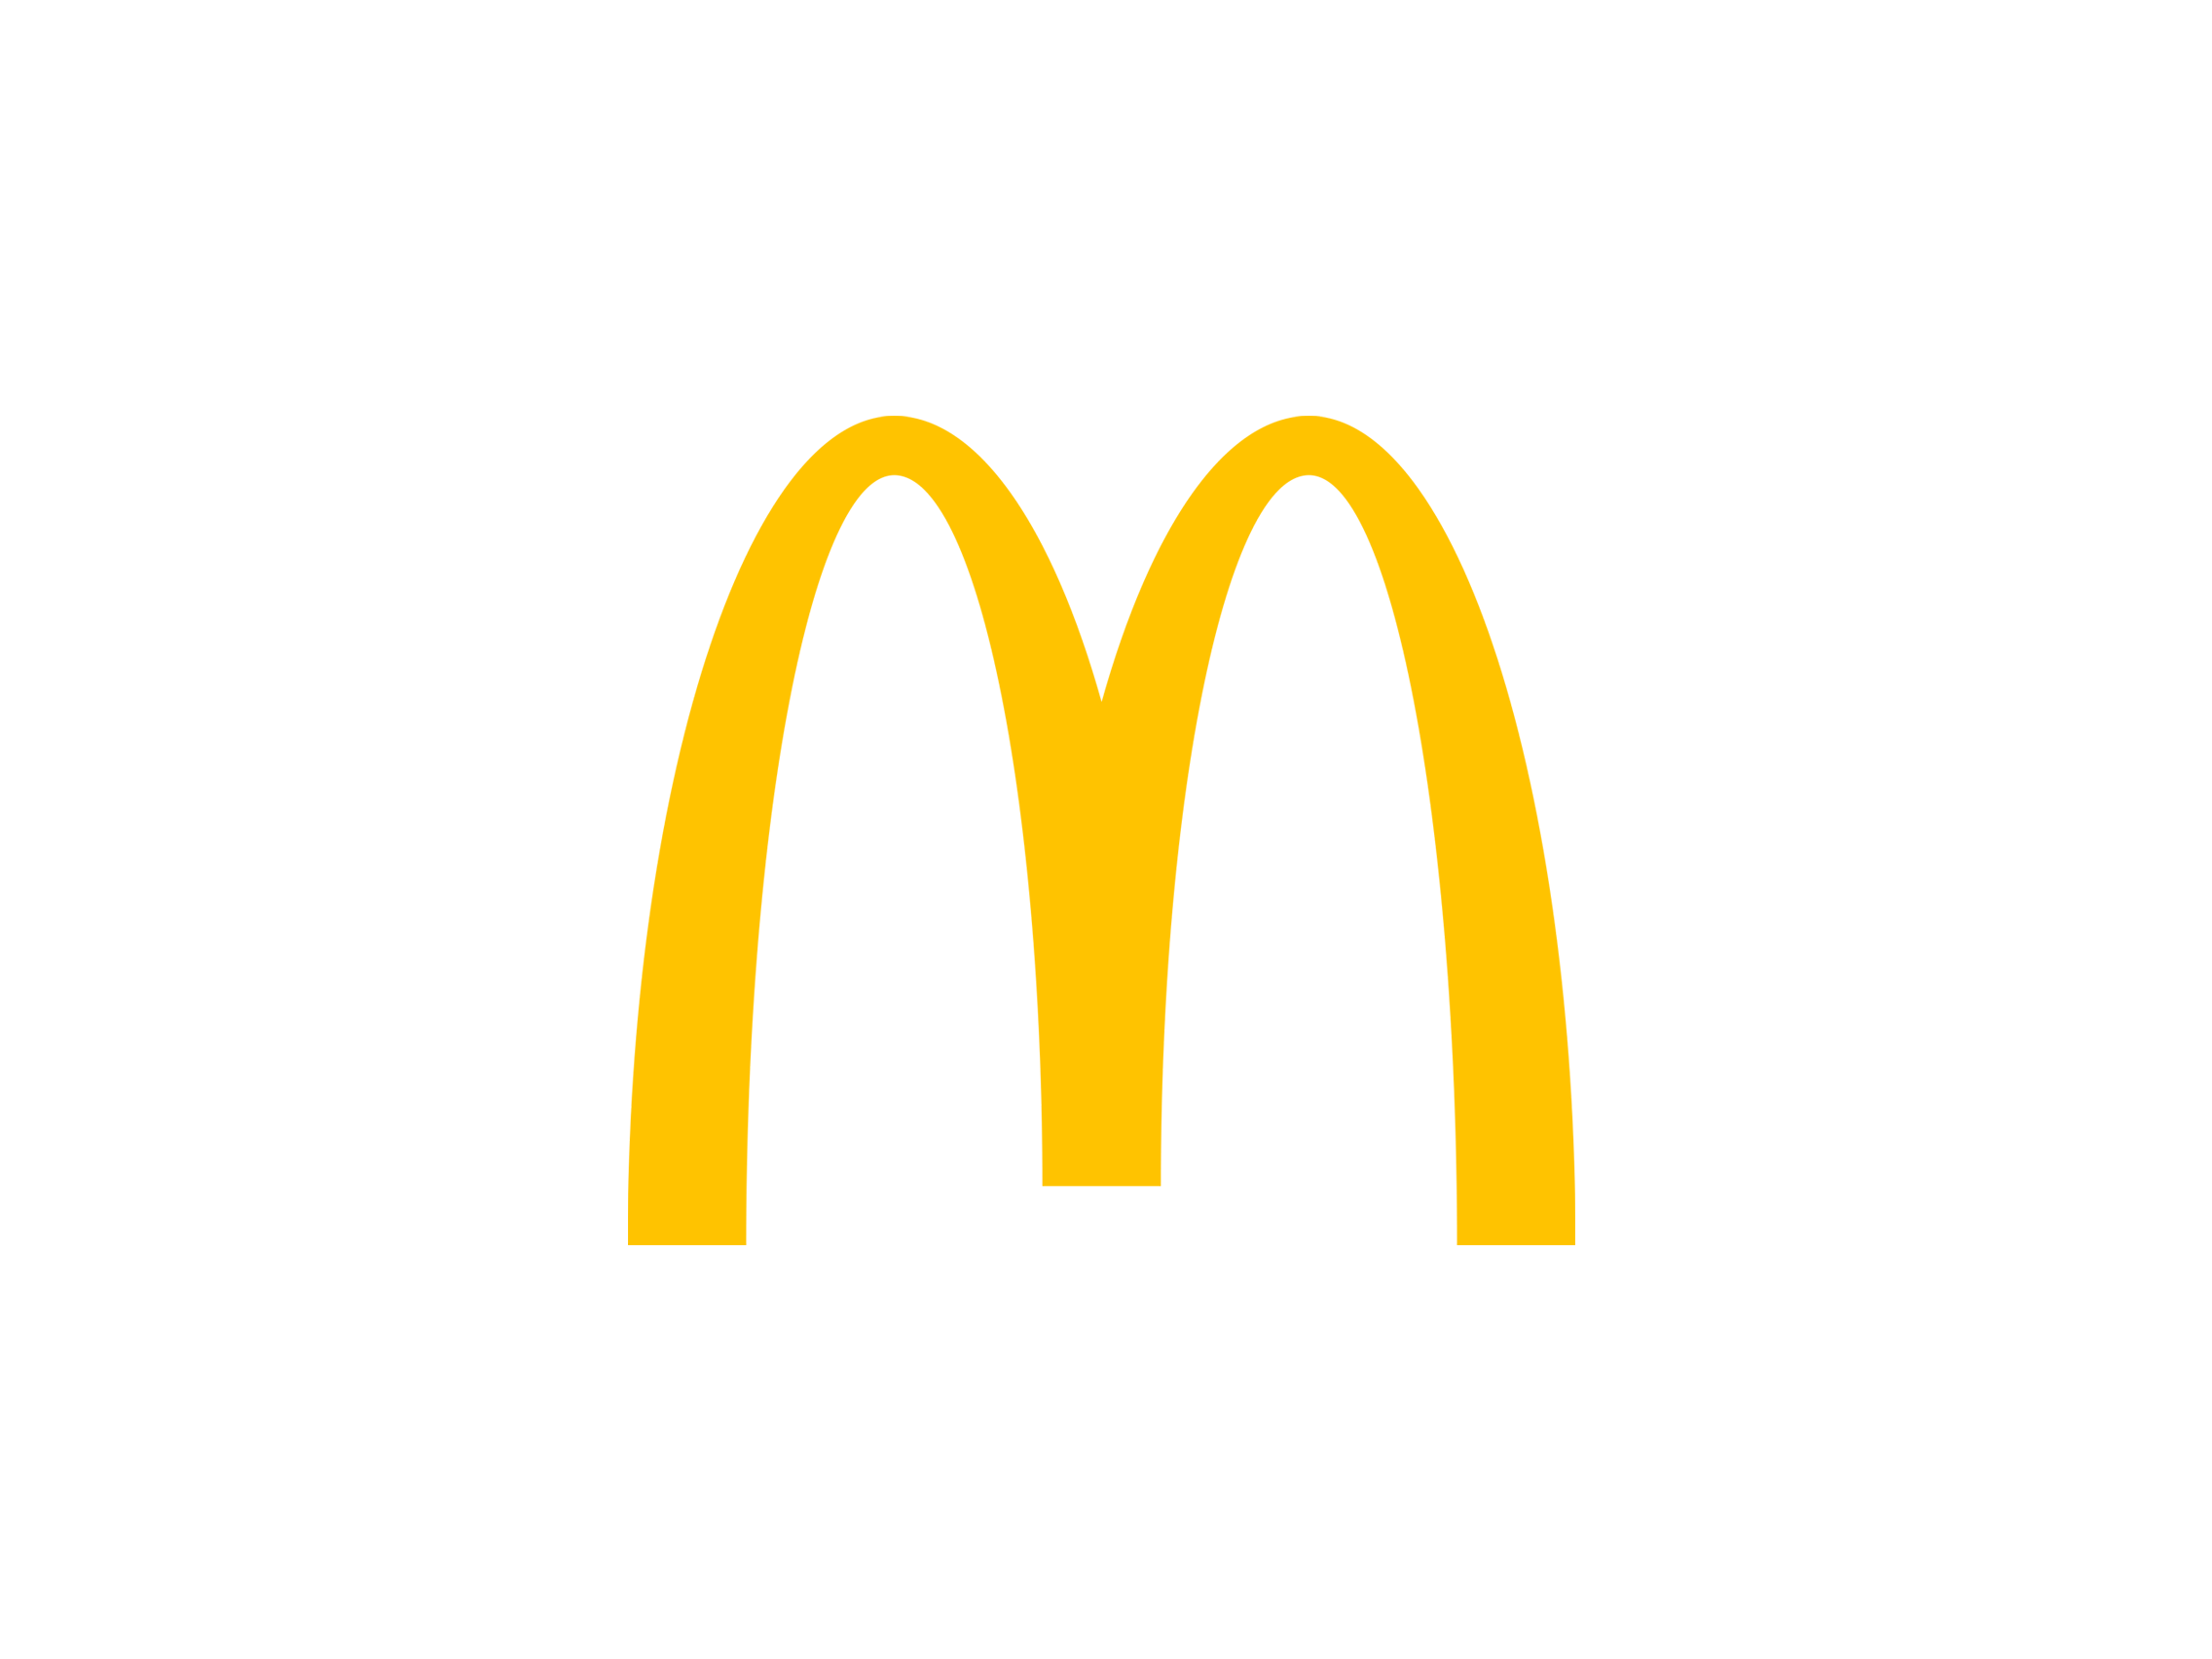 mcdonalds-png-logo-simple-m-1.png